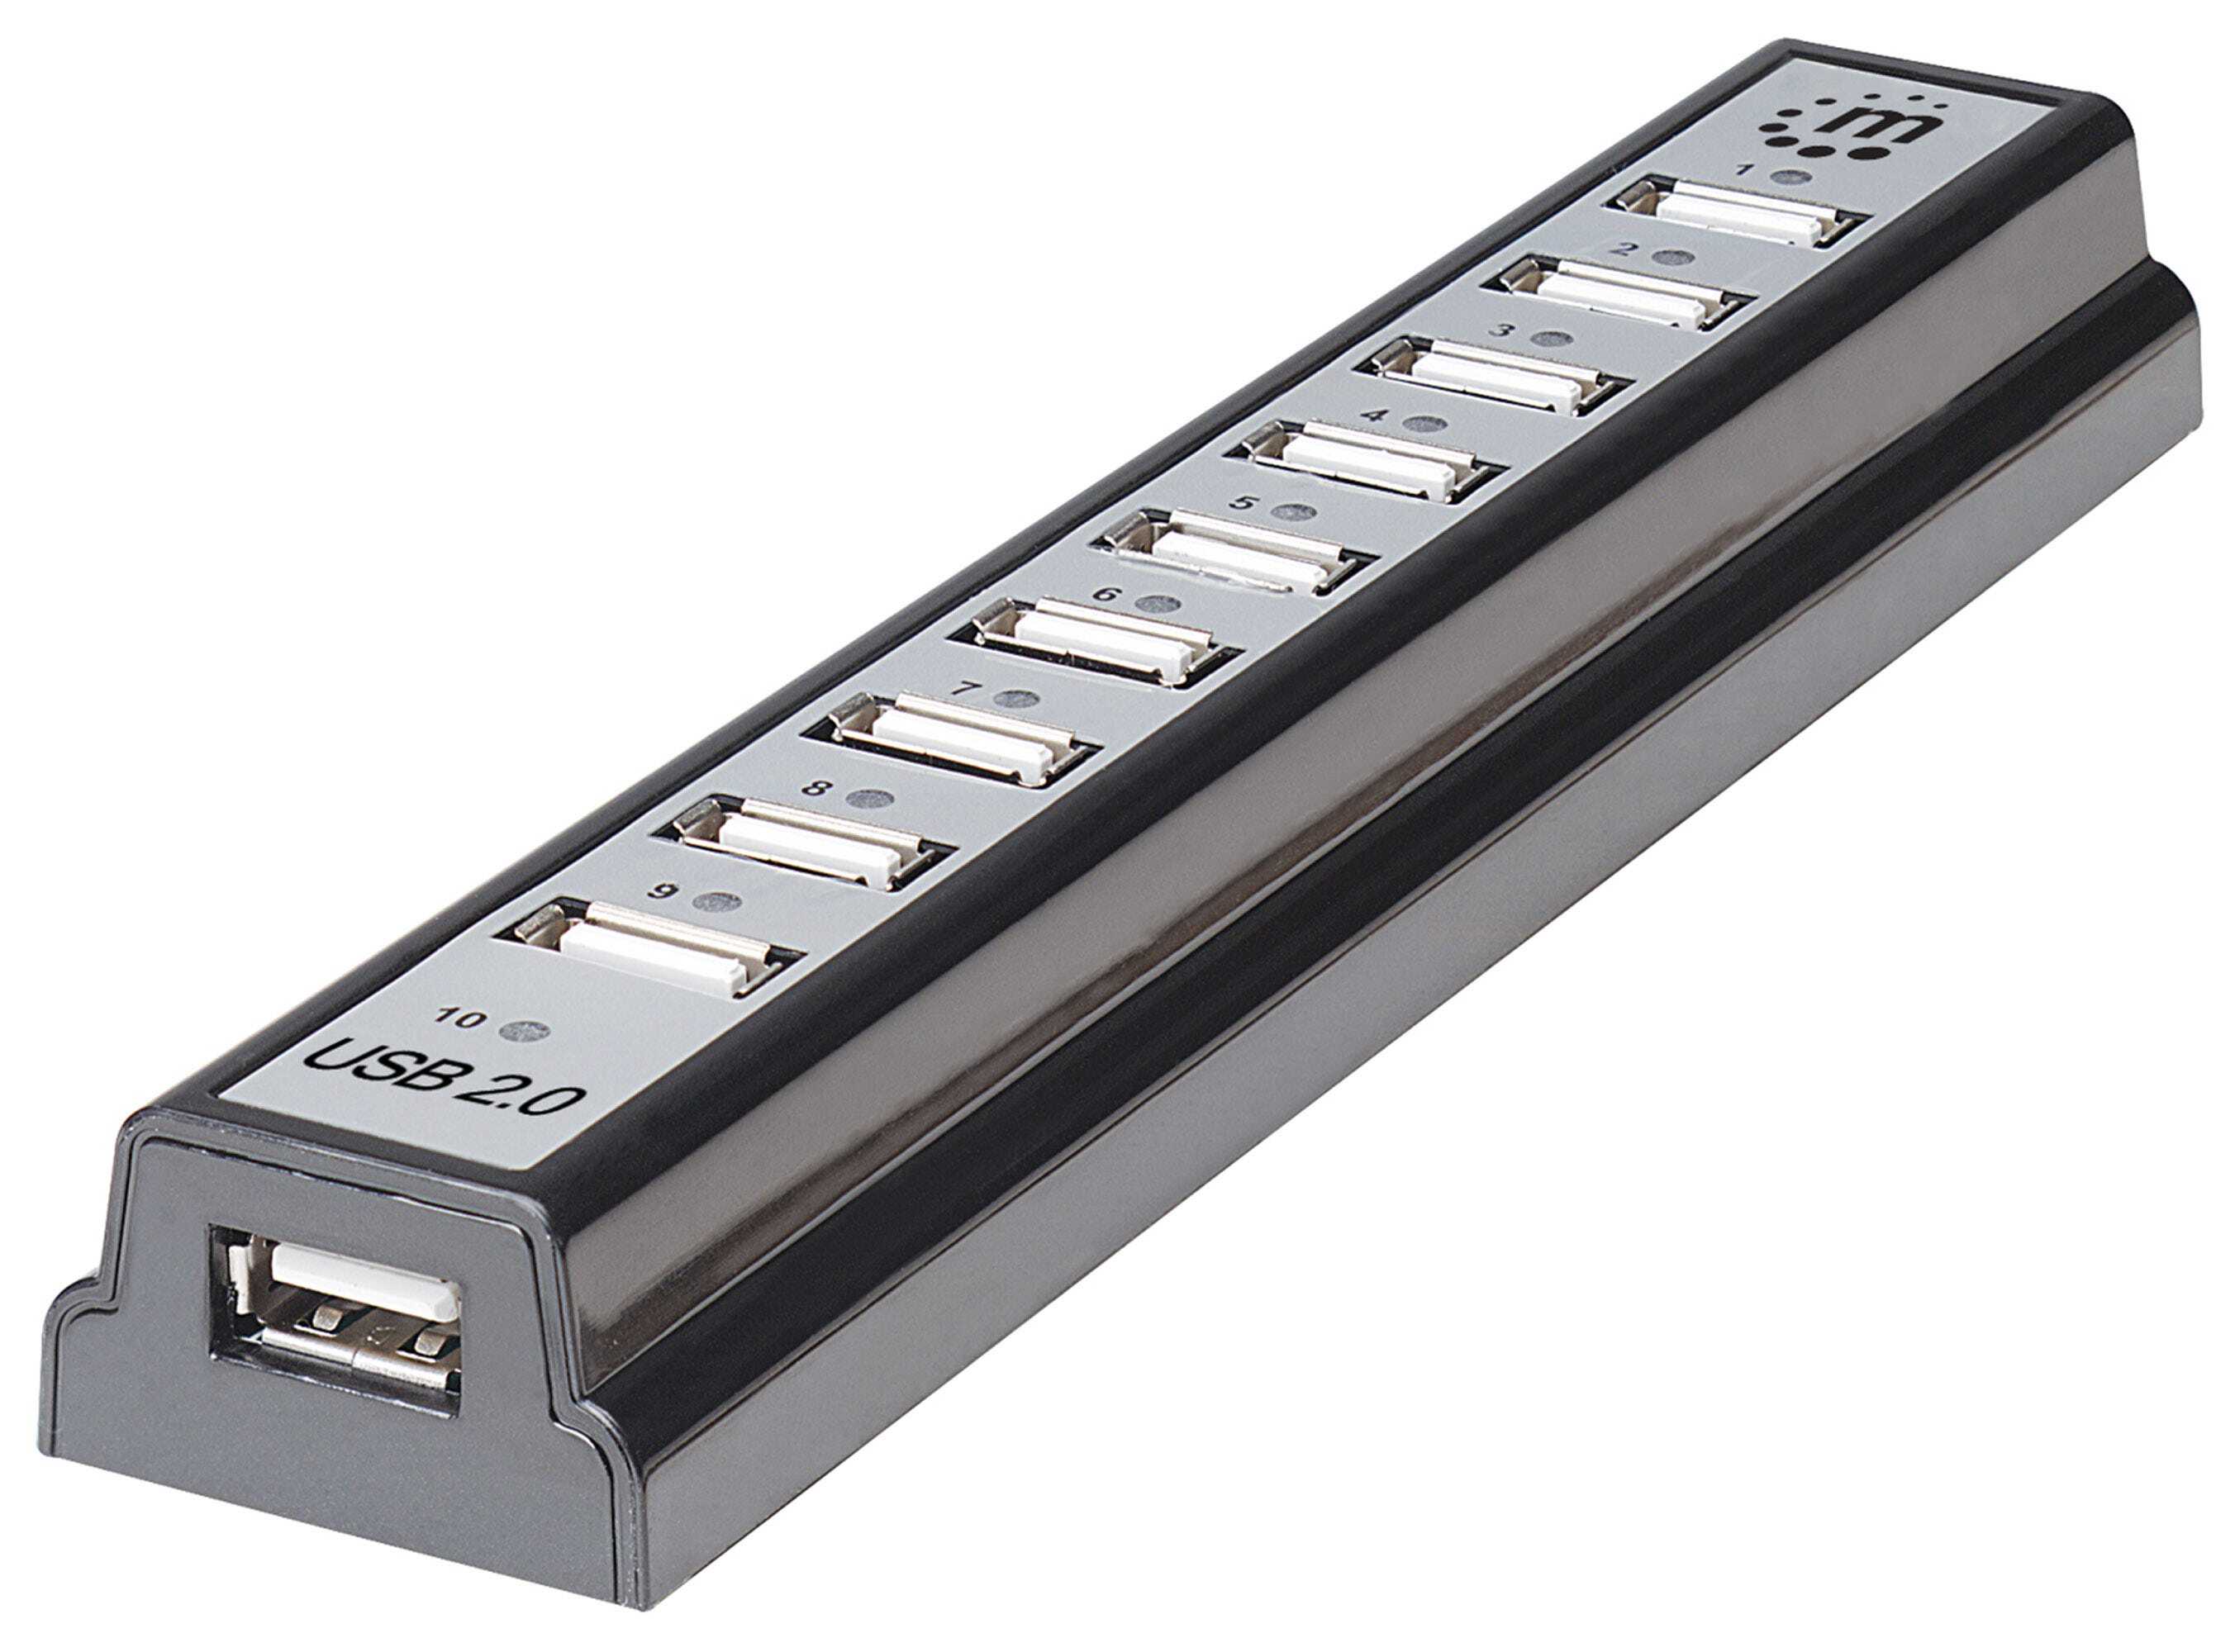 MANHATTAN USB 2.0 Desktop Hub, 10 Ports, Bus or AC Power, Black, Boxed (Euro 2-pin plug)